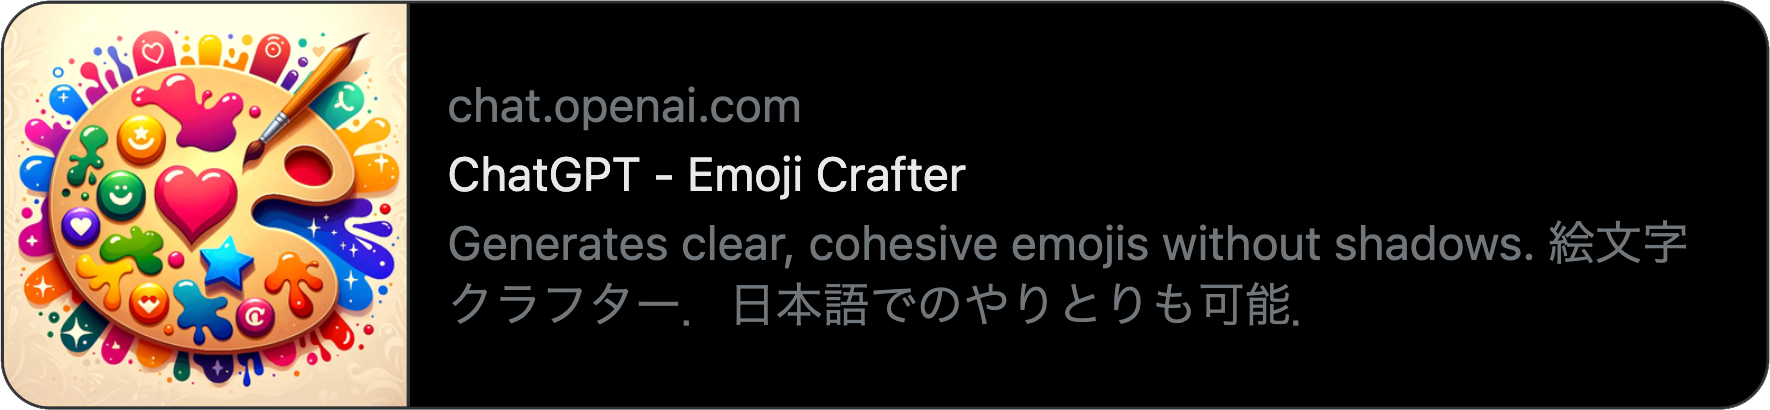 Emoji Crafter(GPTs)